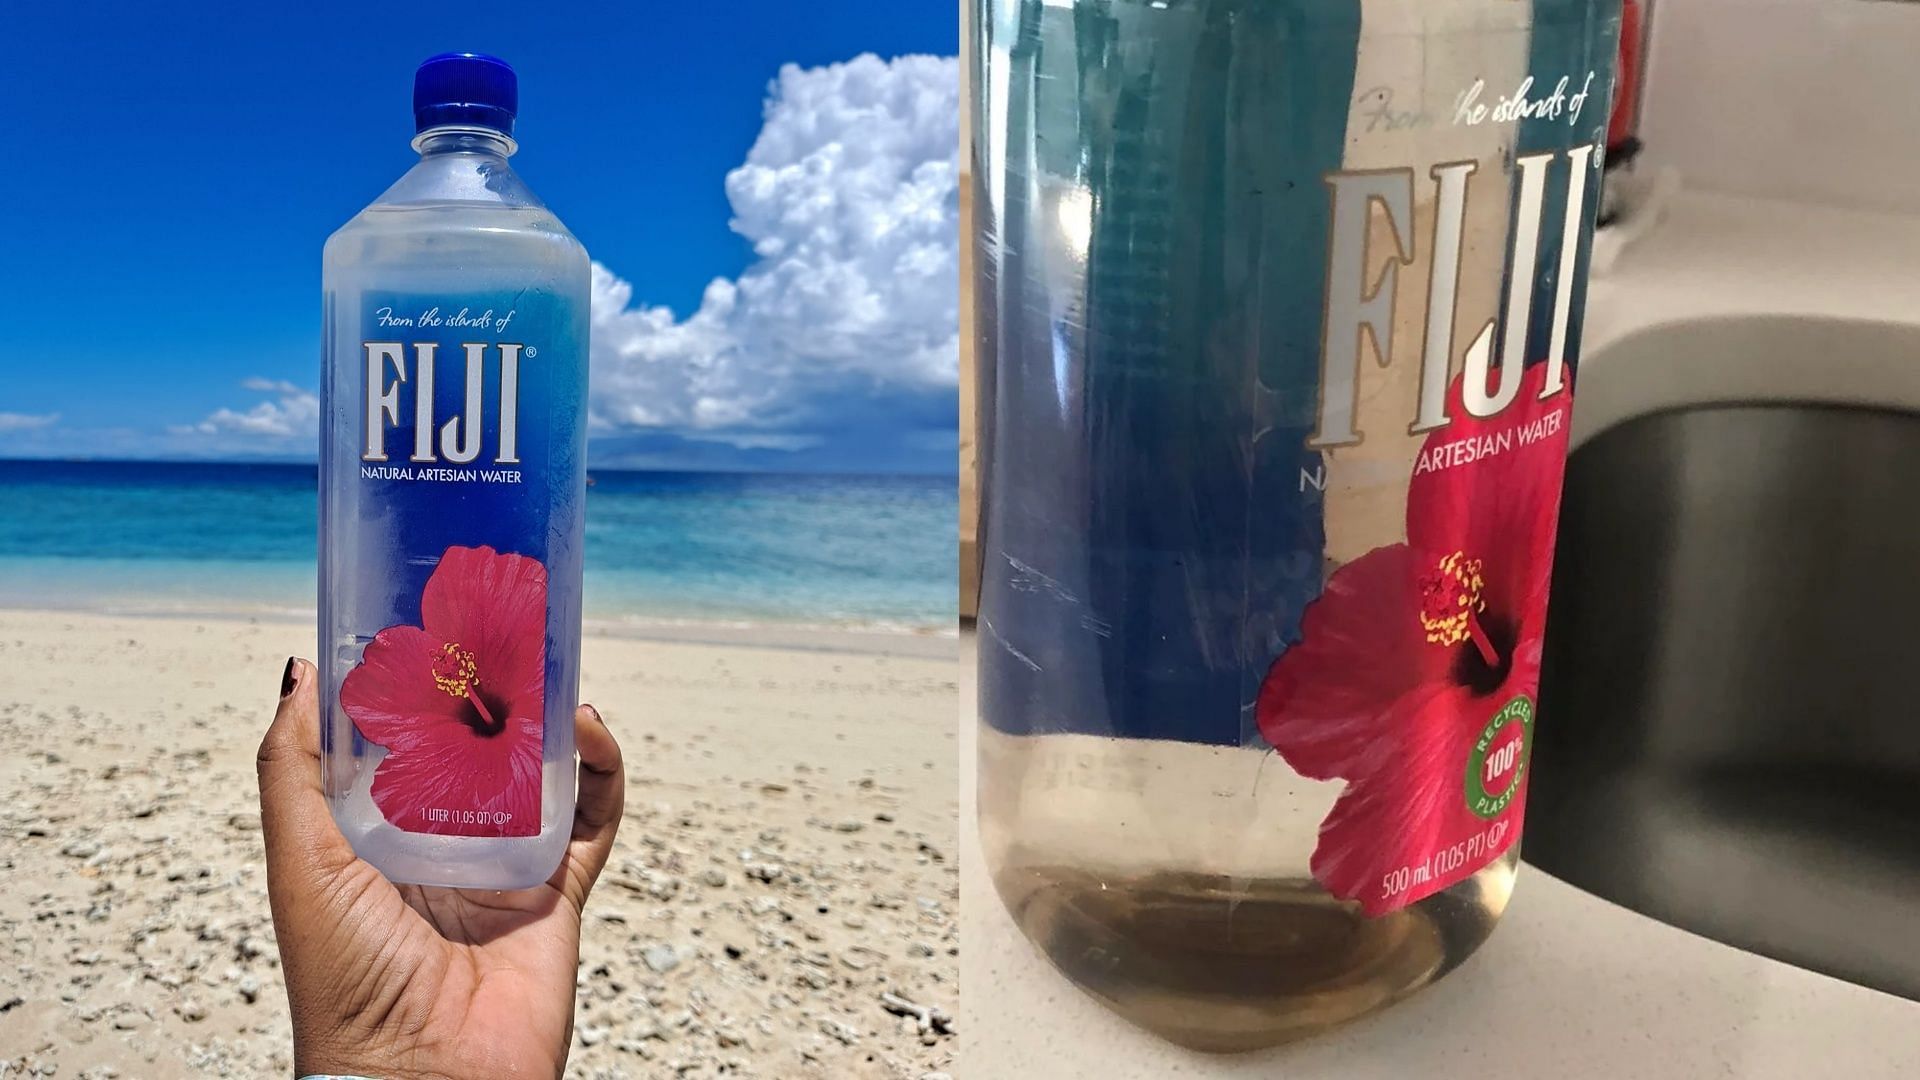 Fiji Water recall notice from Amazon sparks concerns. (Image via Facebook/Sarah Lobles, Reddit/@Teds_Frozen_Head)